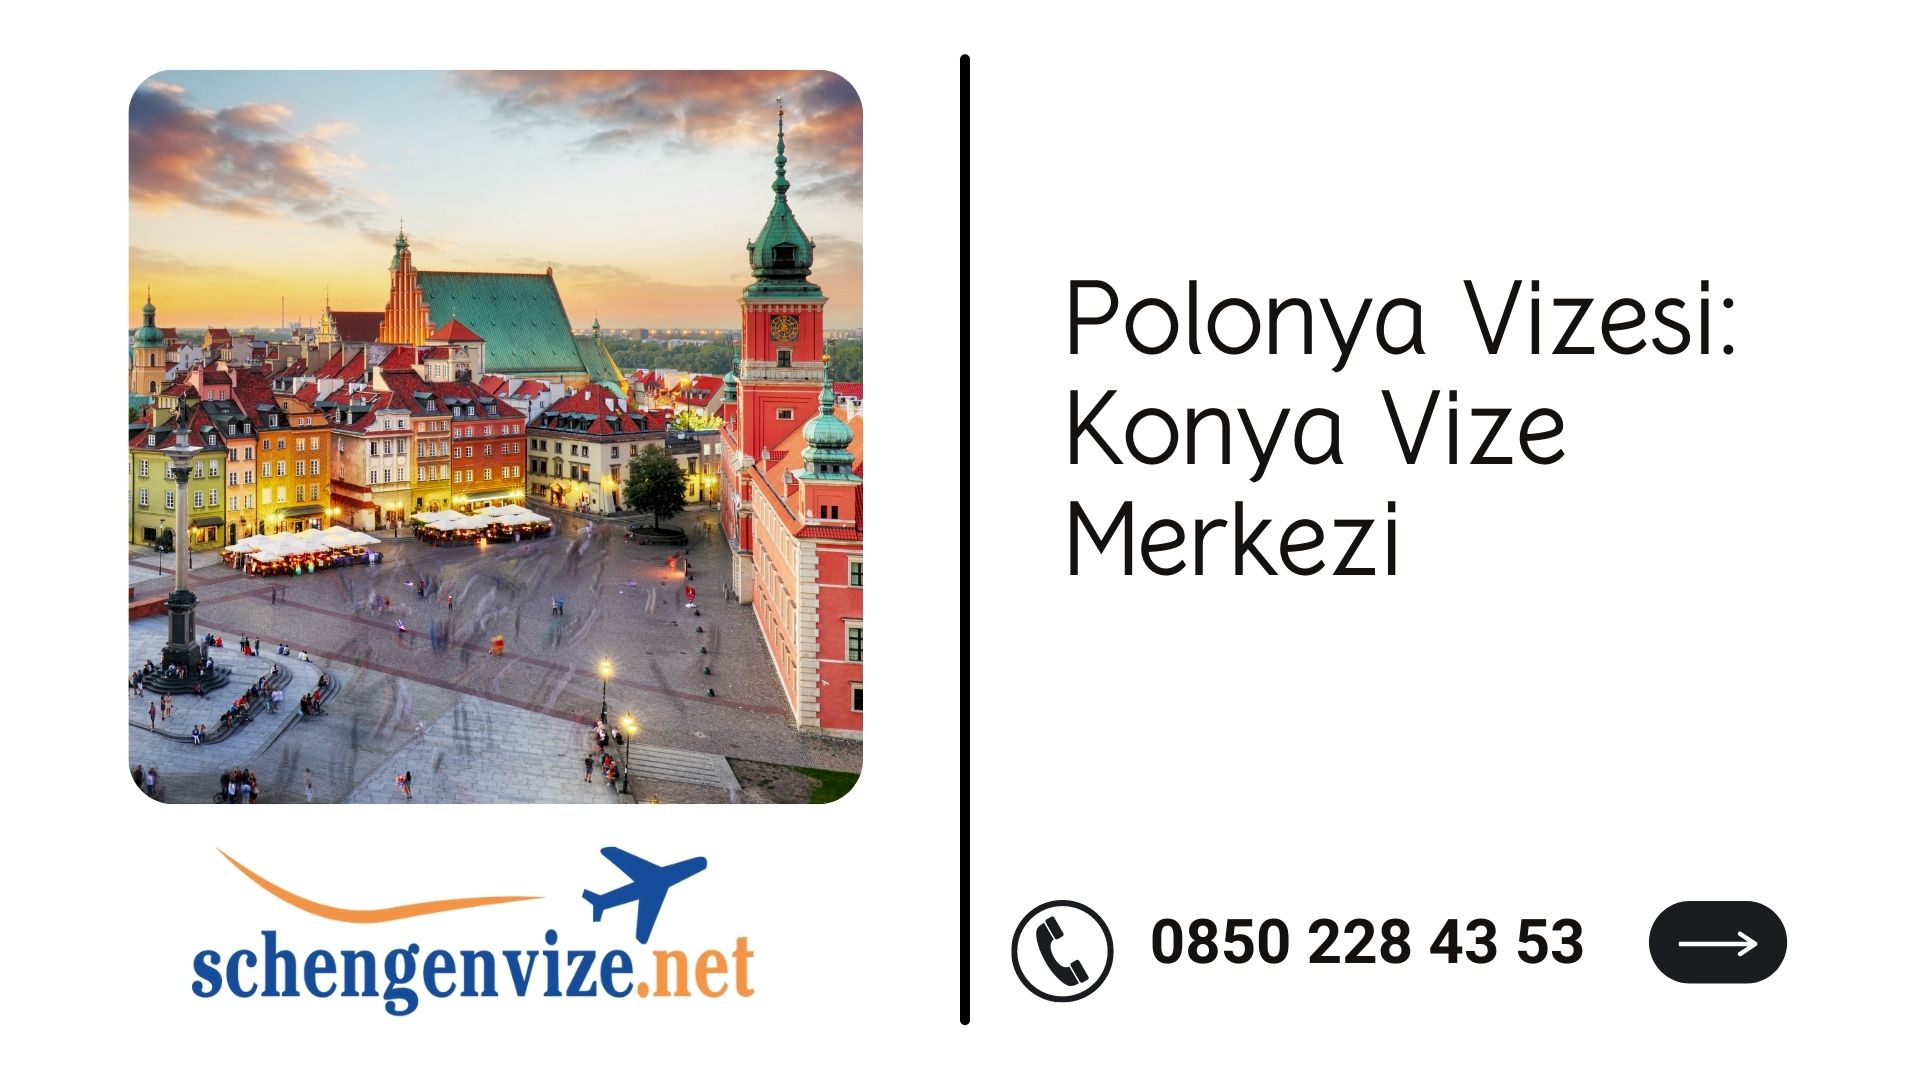 Polonya Vizesi: Konya Vize Merkezi